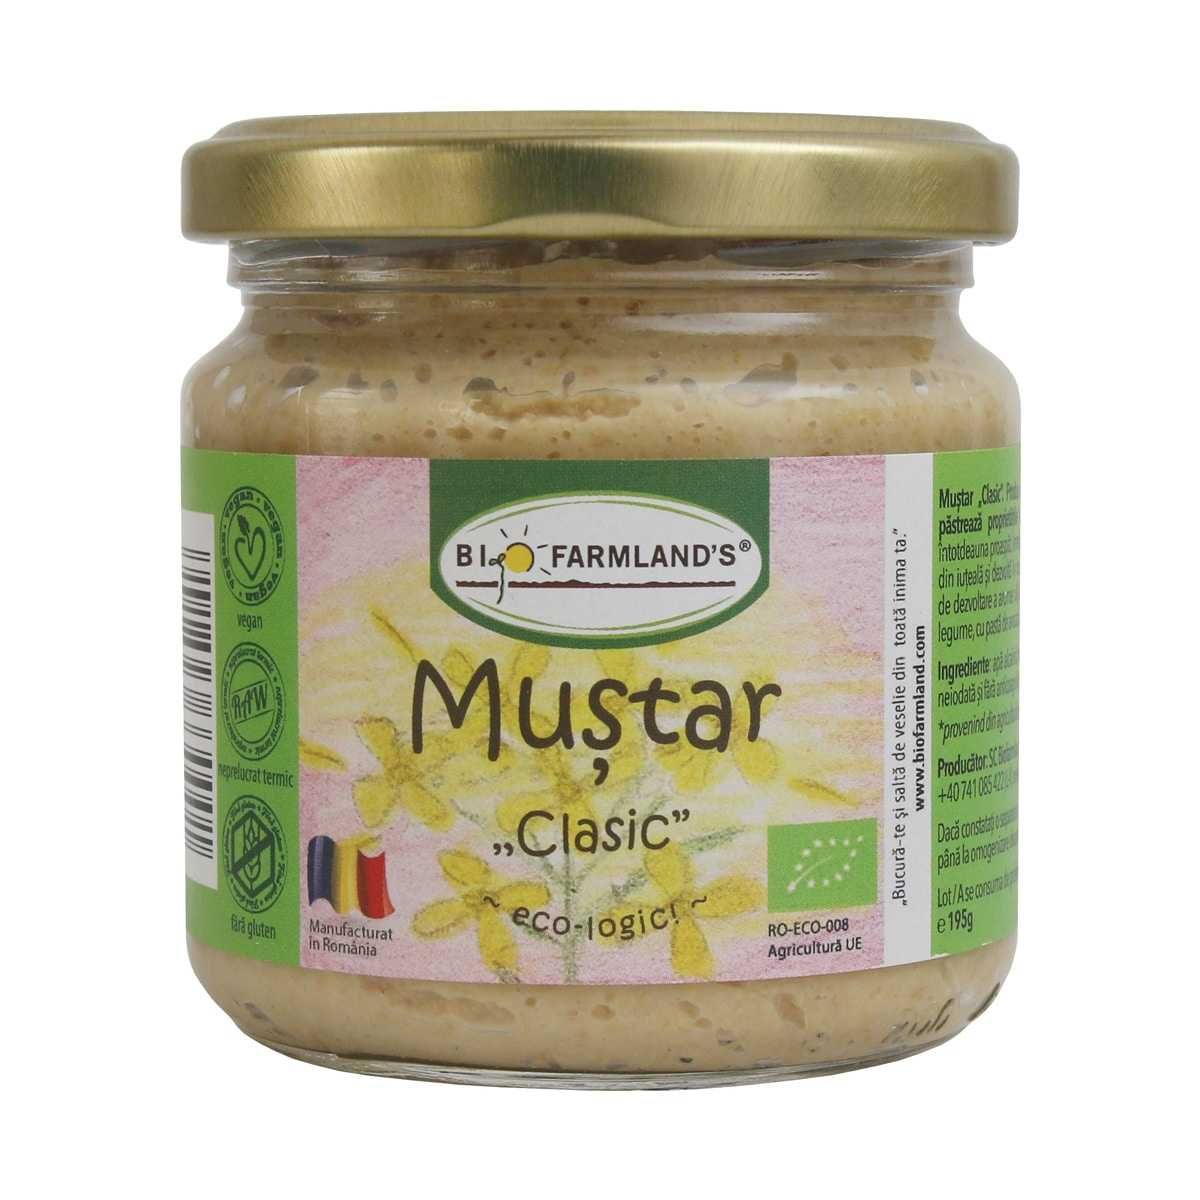 Mustar Classic ecologic - 195g